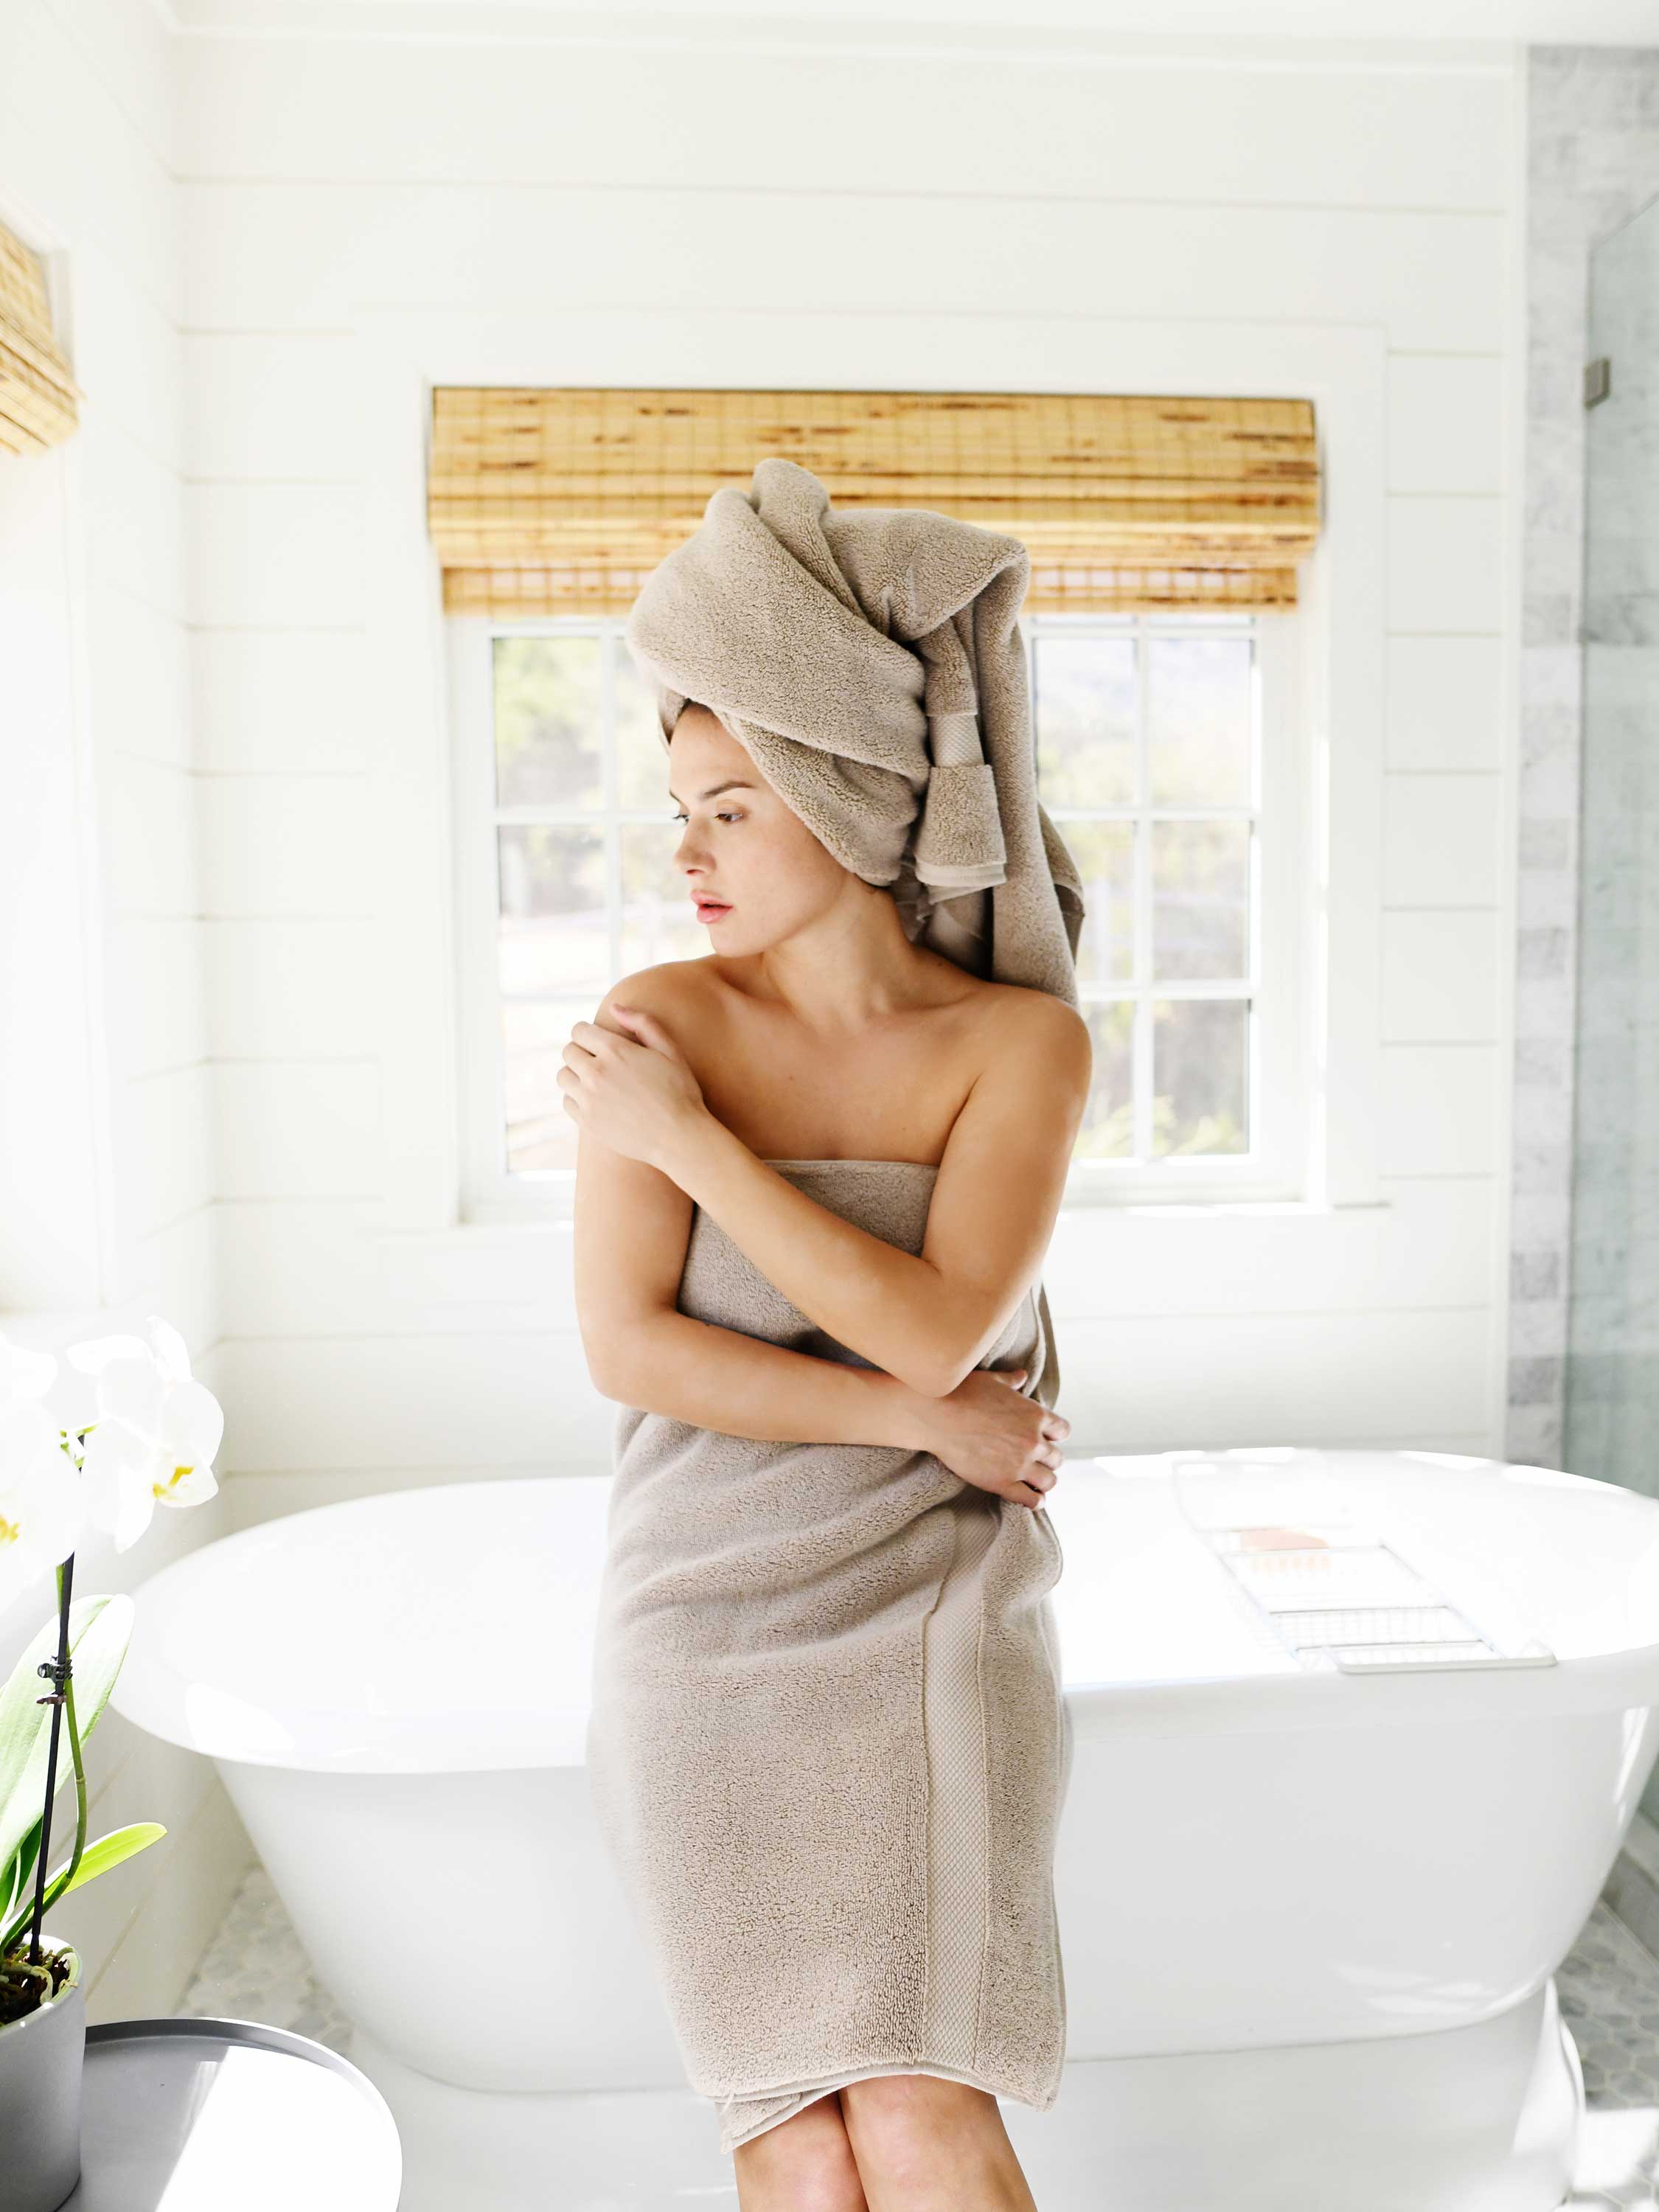 Supima Cotton Bath Towel Set by Laguna Beach Textile Co - 2 Bath Towels -  Hotel Quality Plush 730 GSM - Large 57 x 30 White